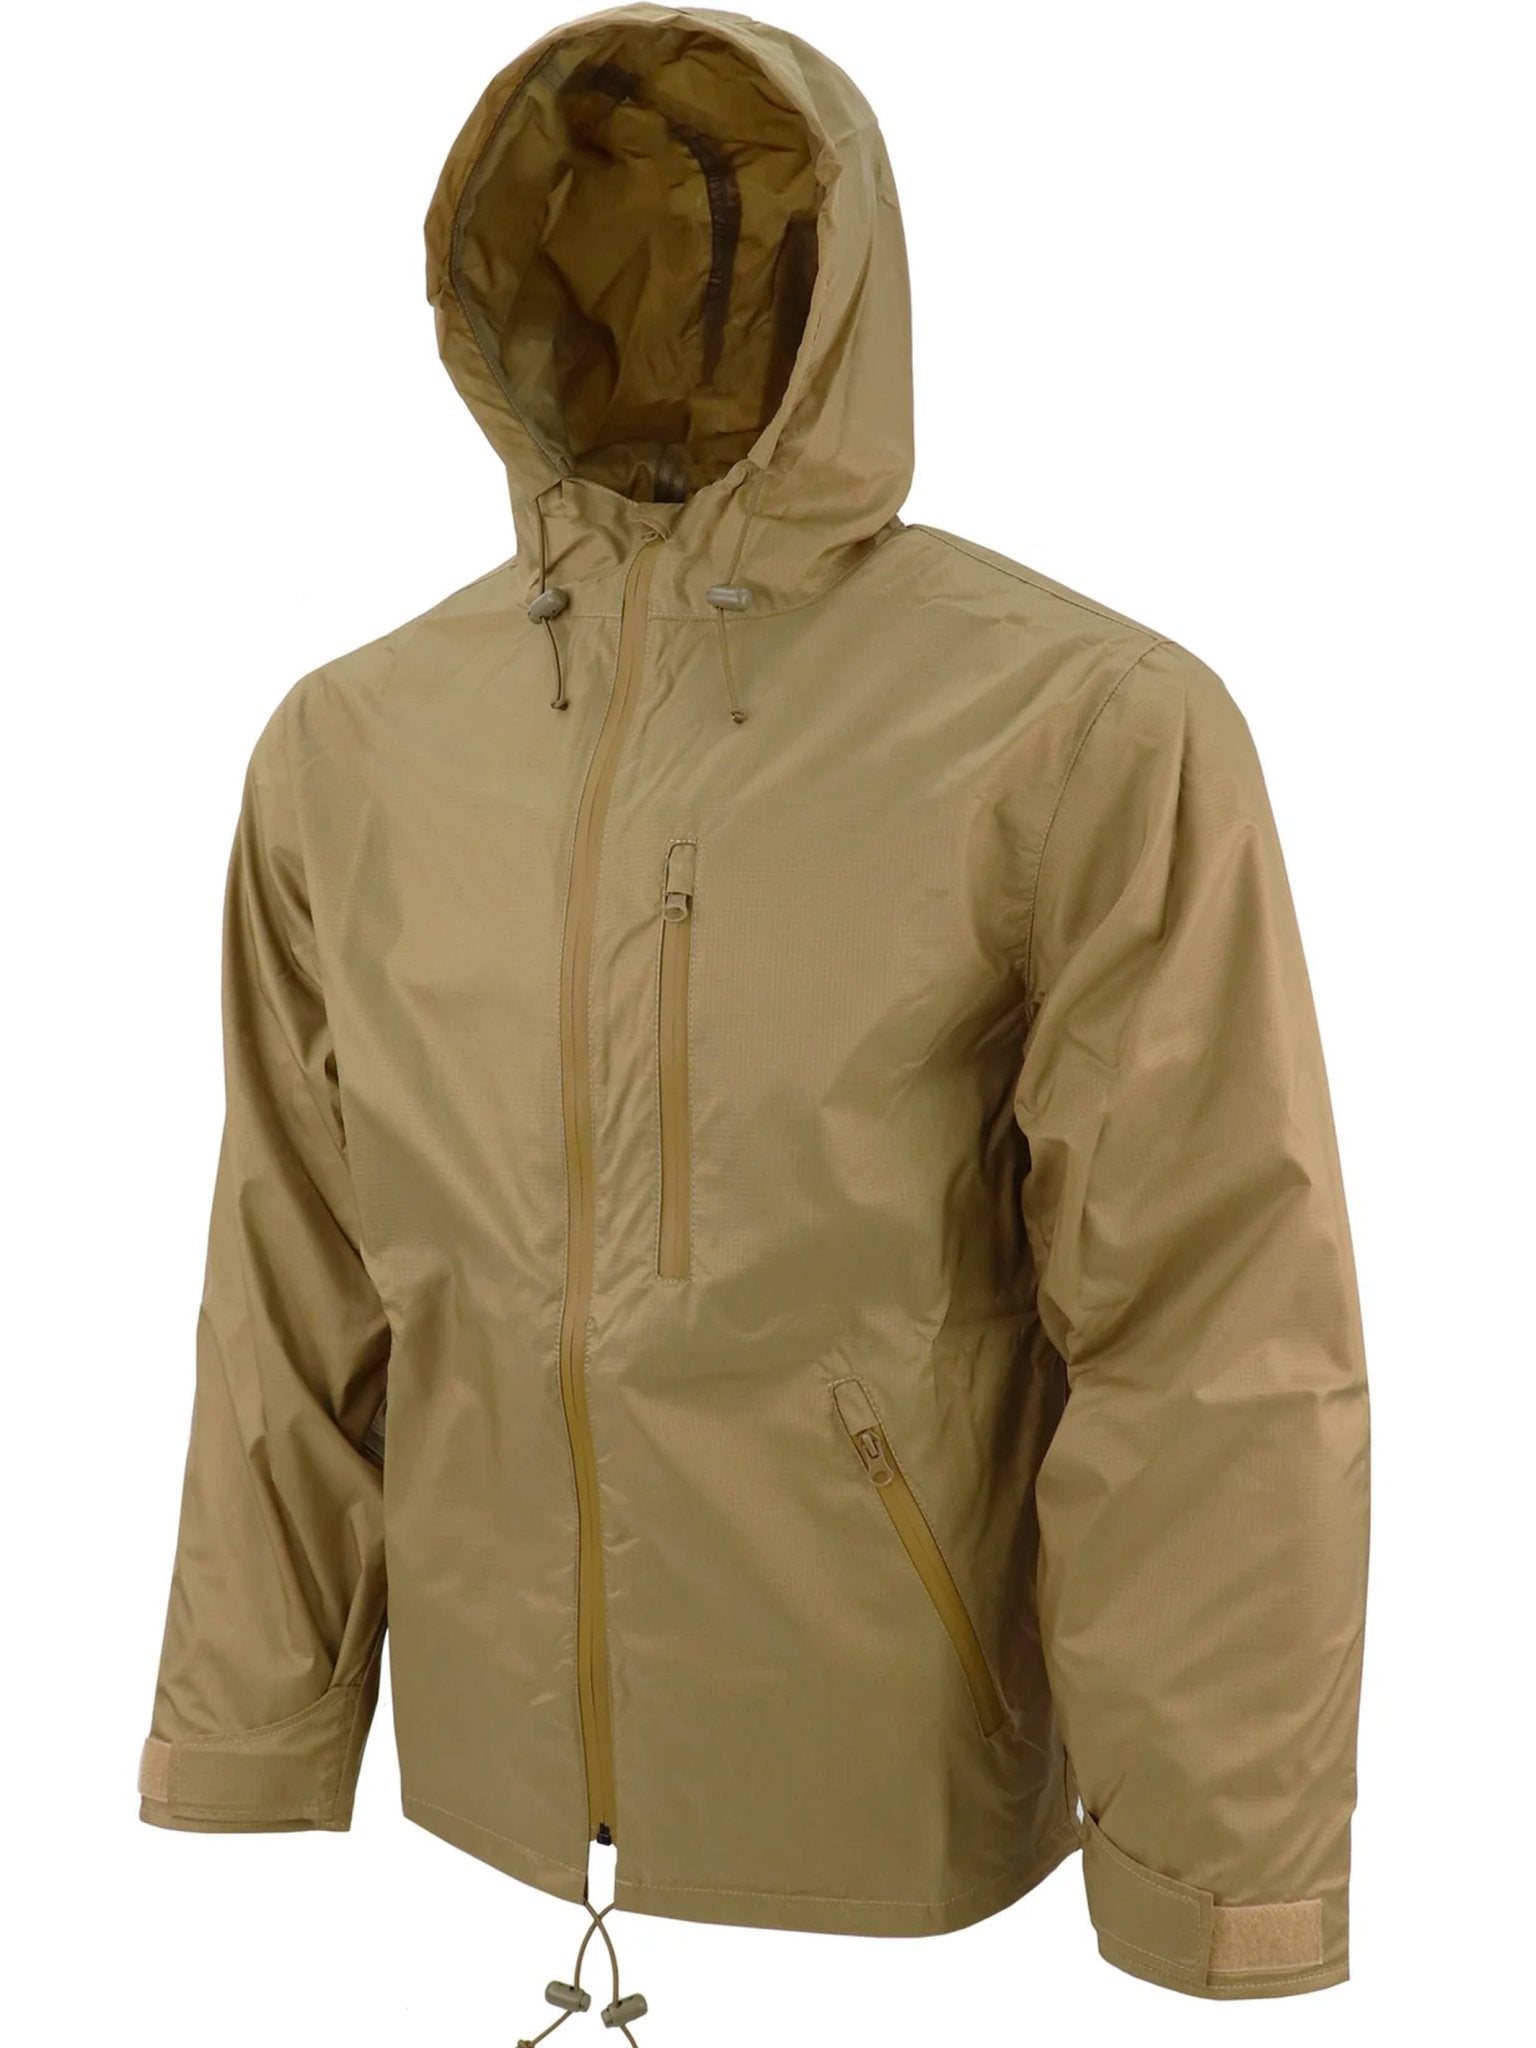 4elementsclothingArktisArktis - A310 RAINSHIELD Waterproof Coat / Jacket - Taped SeamsOuterwear